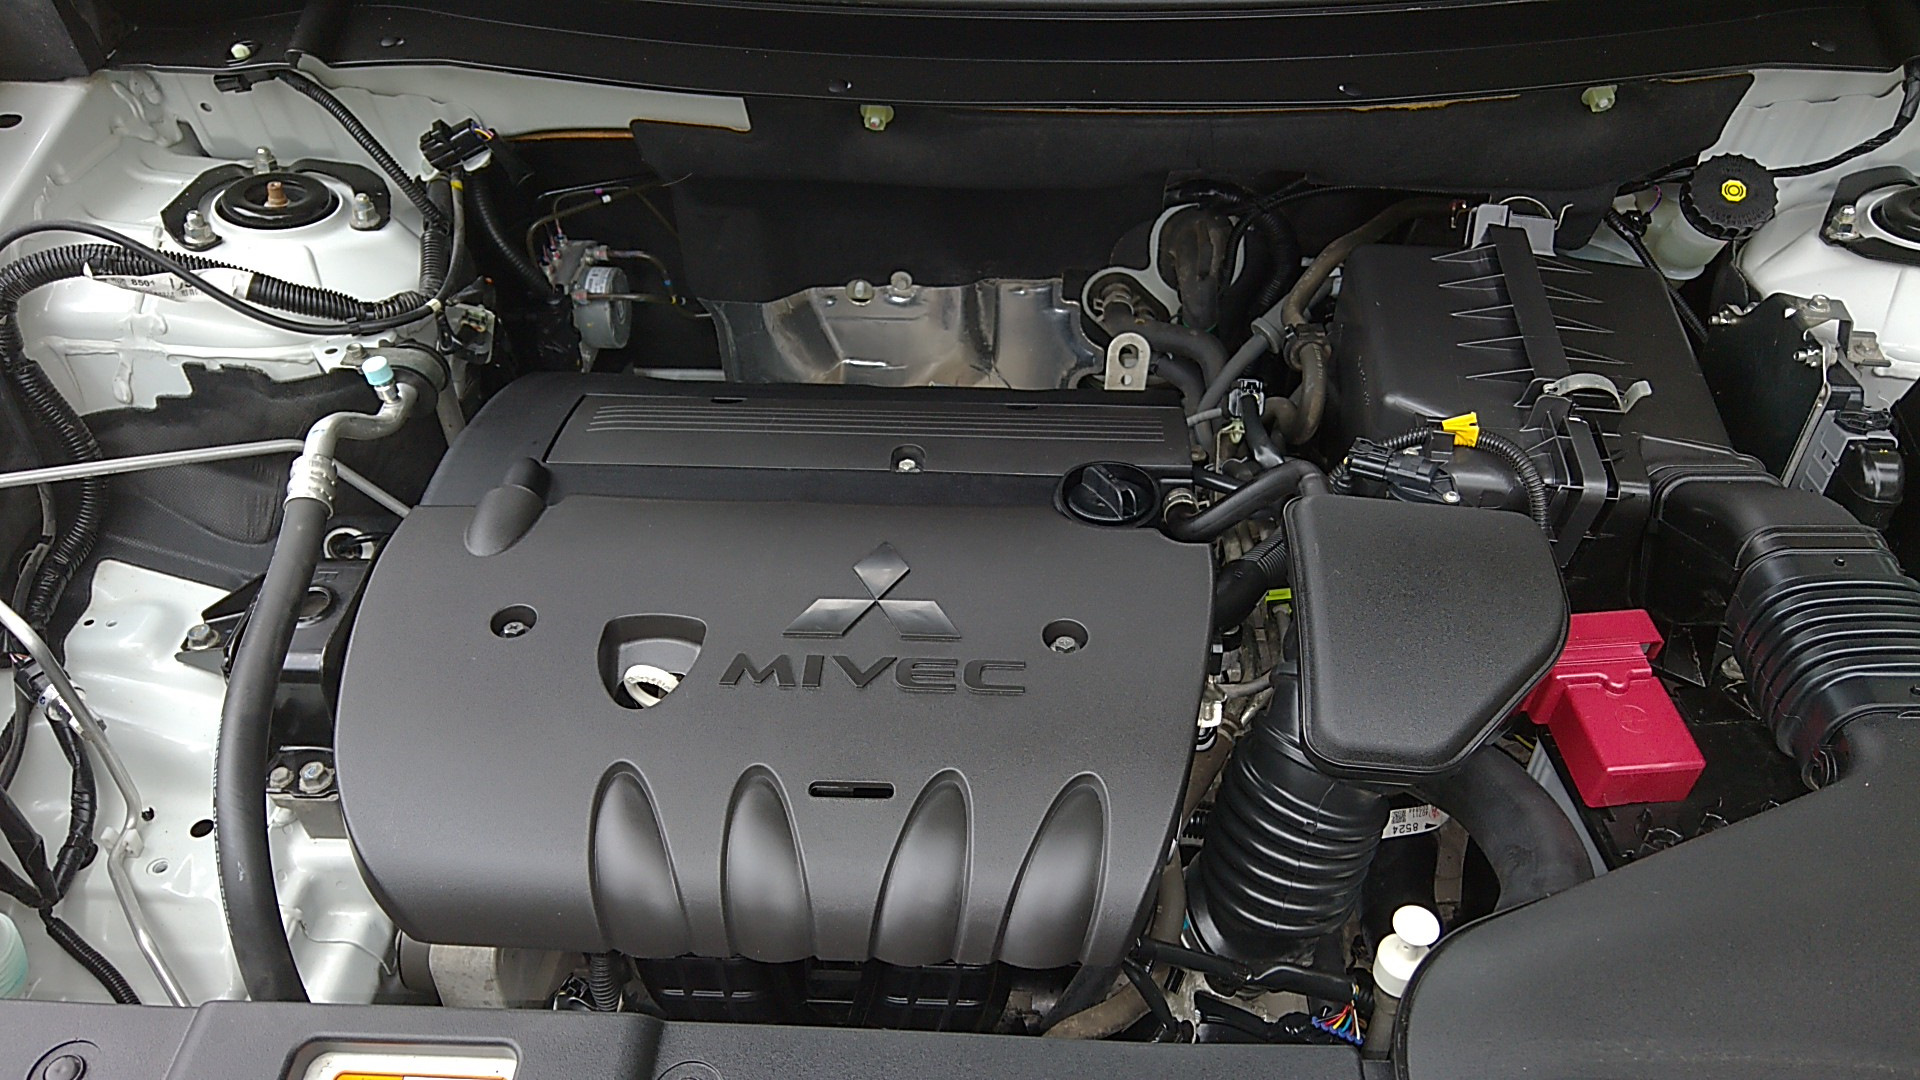 Мицубиси аутлендер двигатель 2. Двигатель Митсубиси Аутлендер 2.4. Двигатель Outlander 3 2.0. Двигатель Mitsubishi Outlander 3 2 литра. Двигатель Митсубиси Аутлендер 2.0.